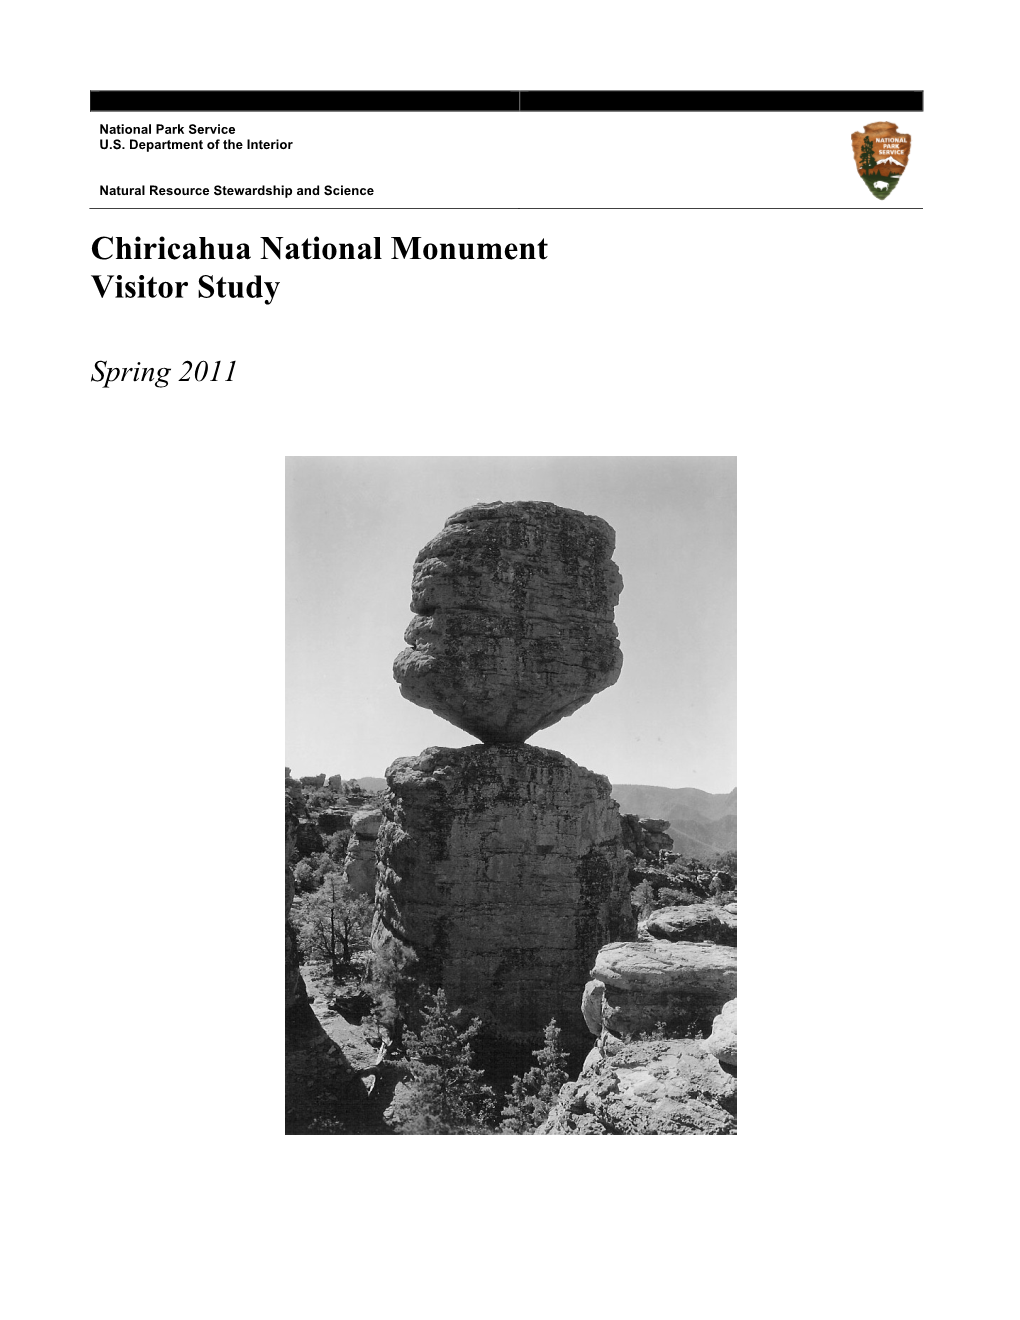 Chiricahua National Monument Visitor Study